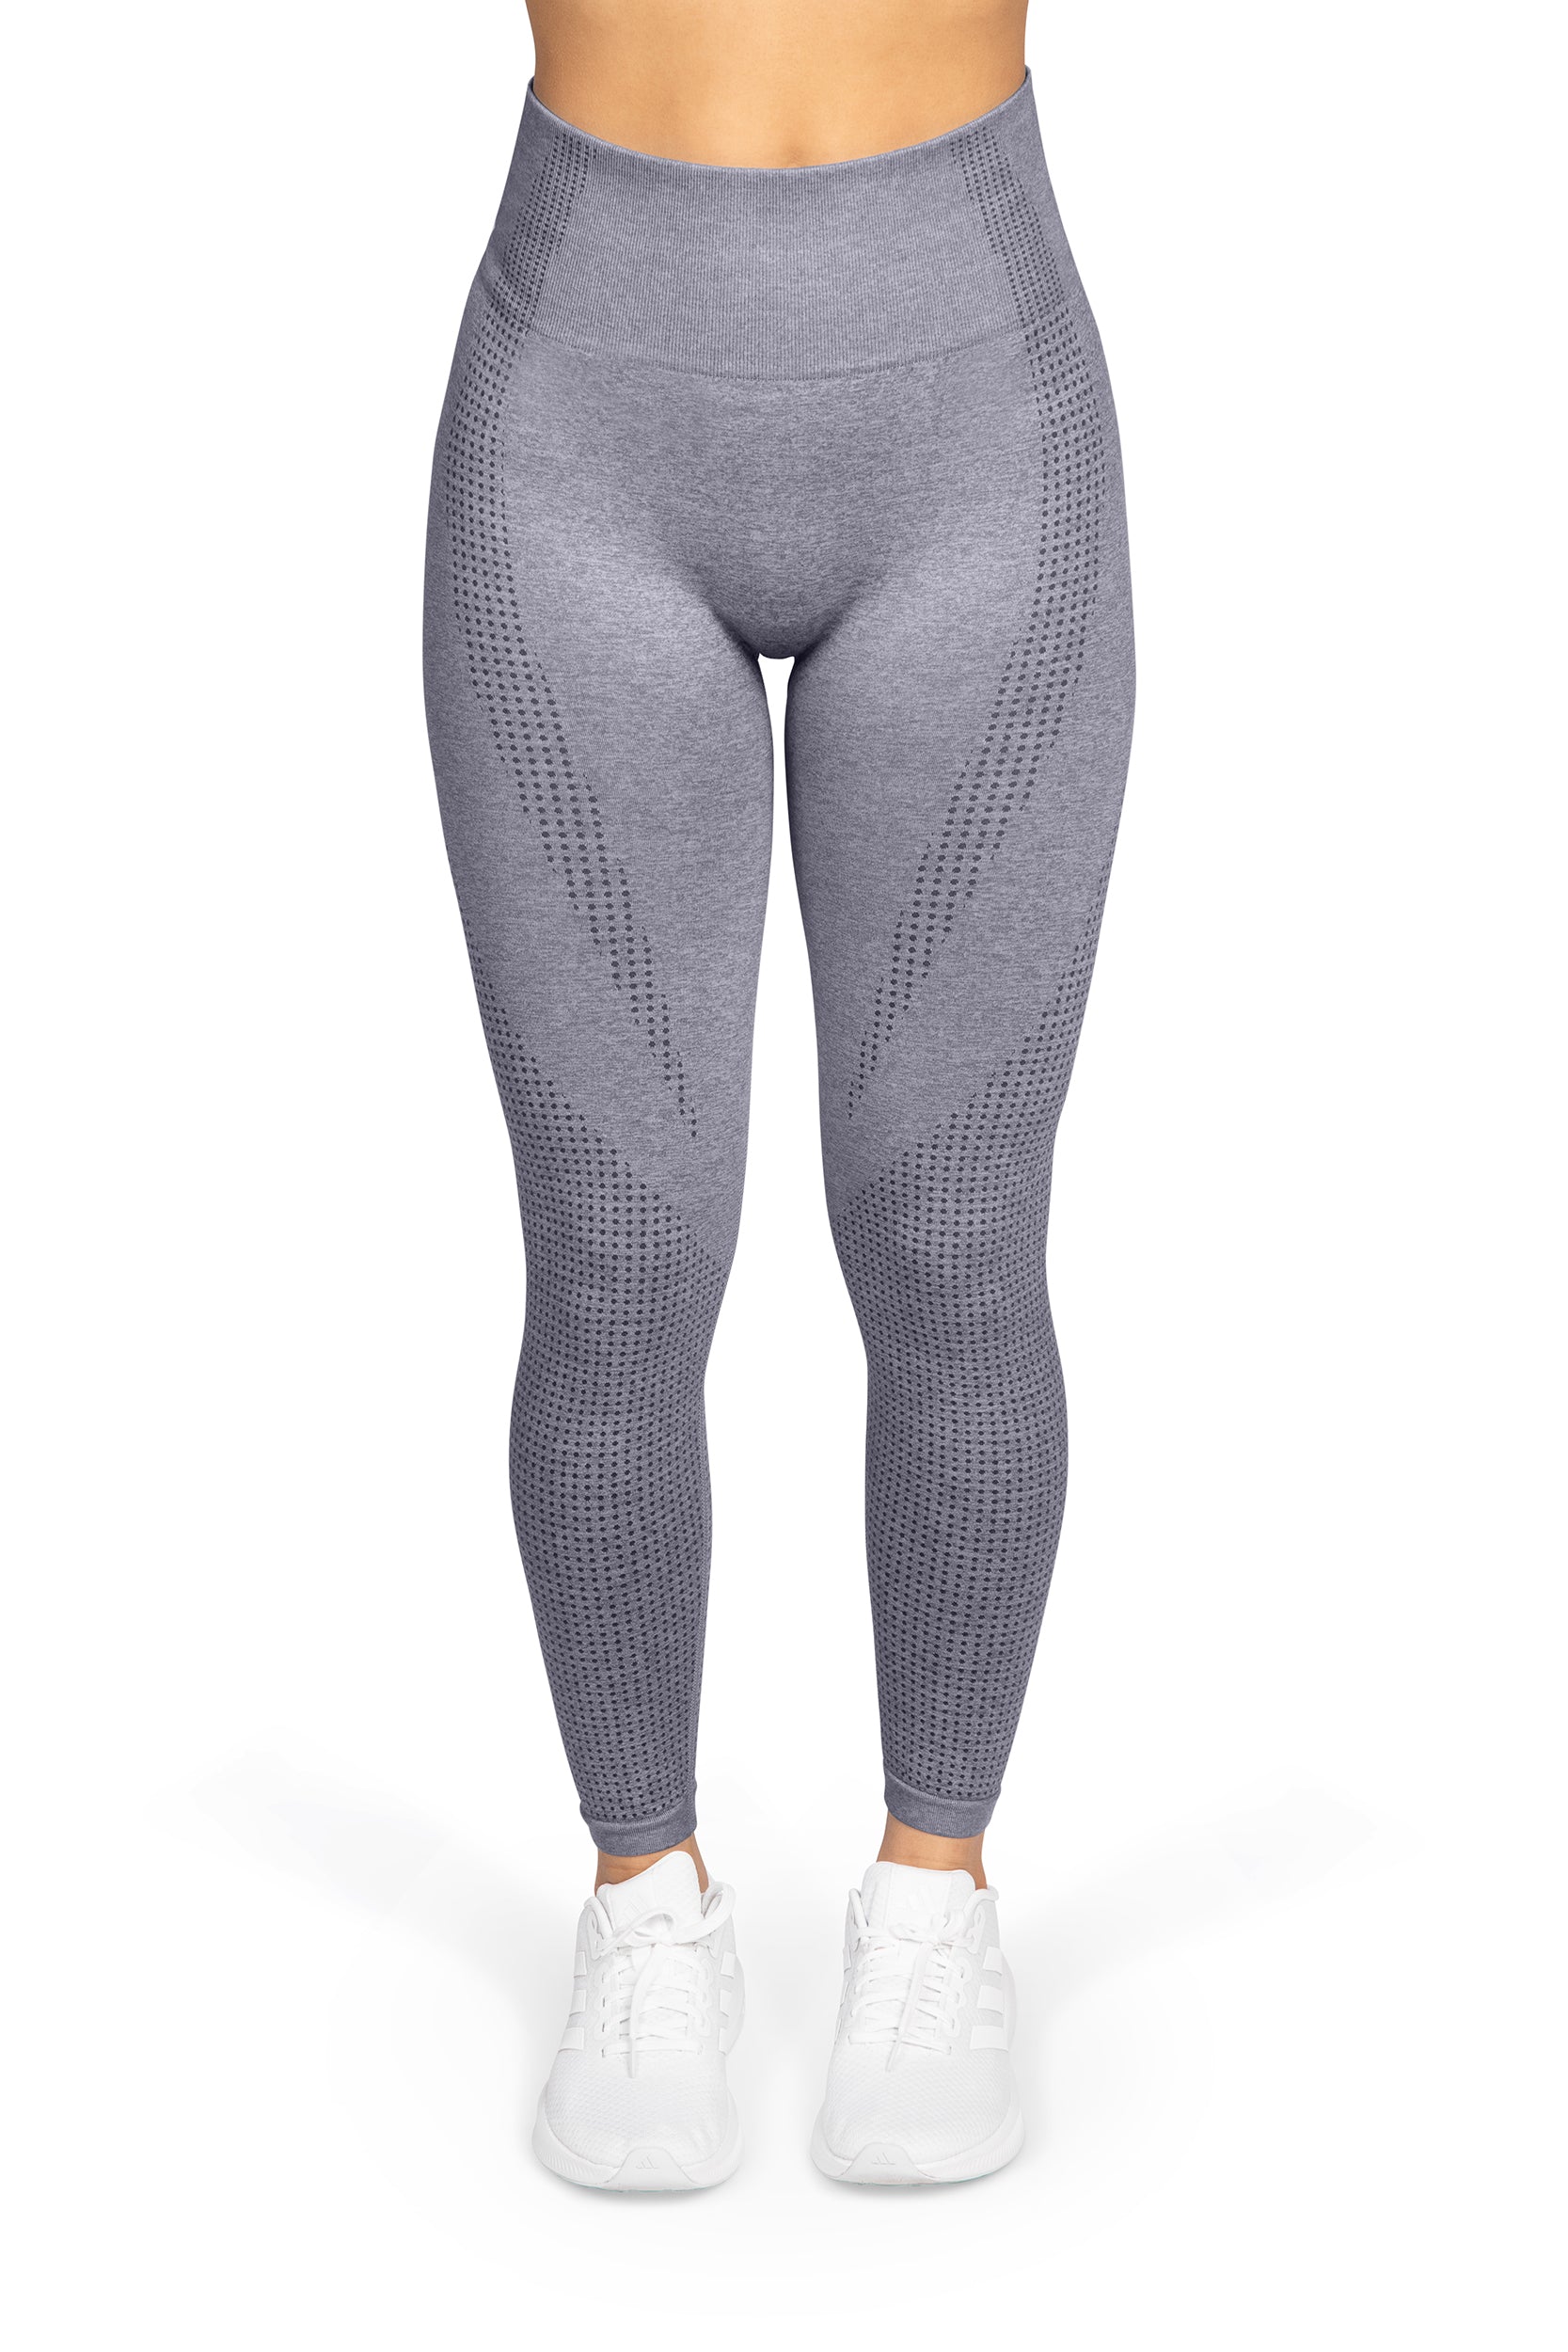 lavender grey seamless leggings